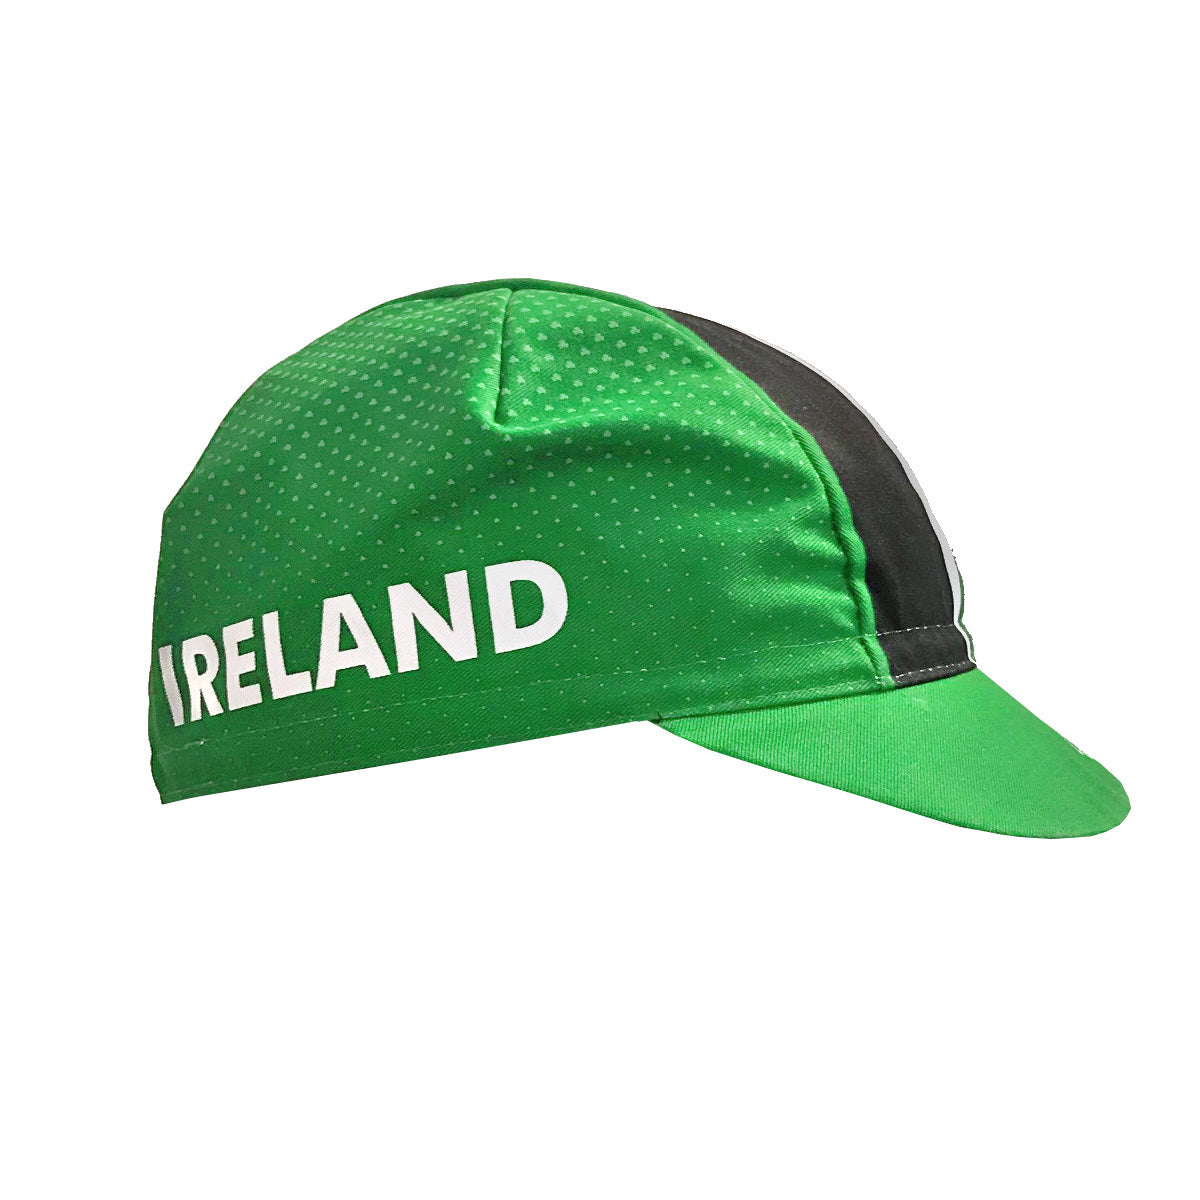 Official Team Ireland Cycling Peak Cap